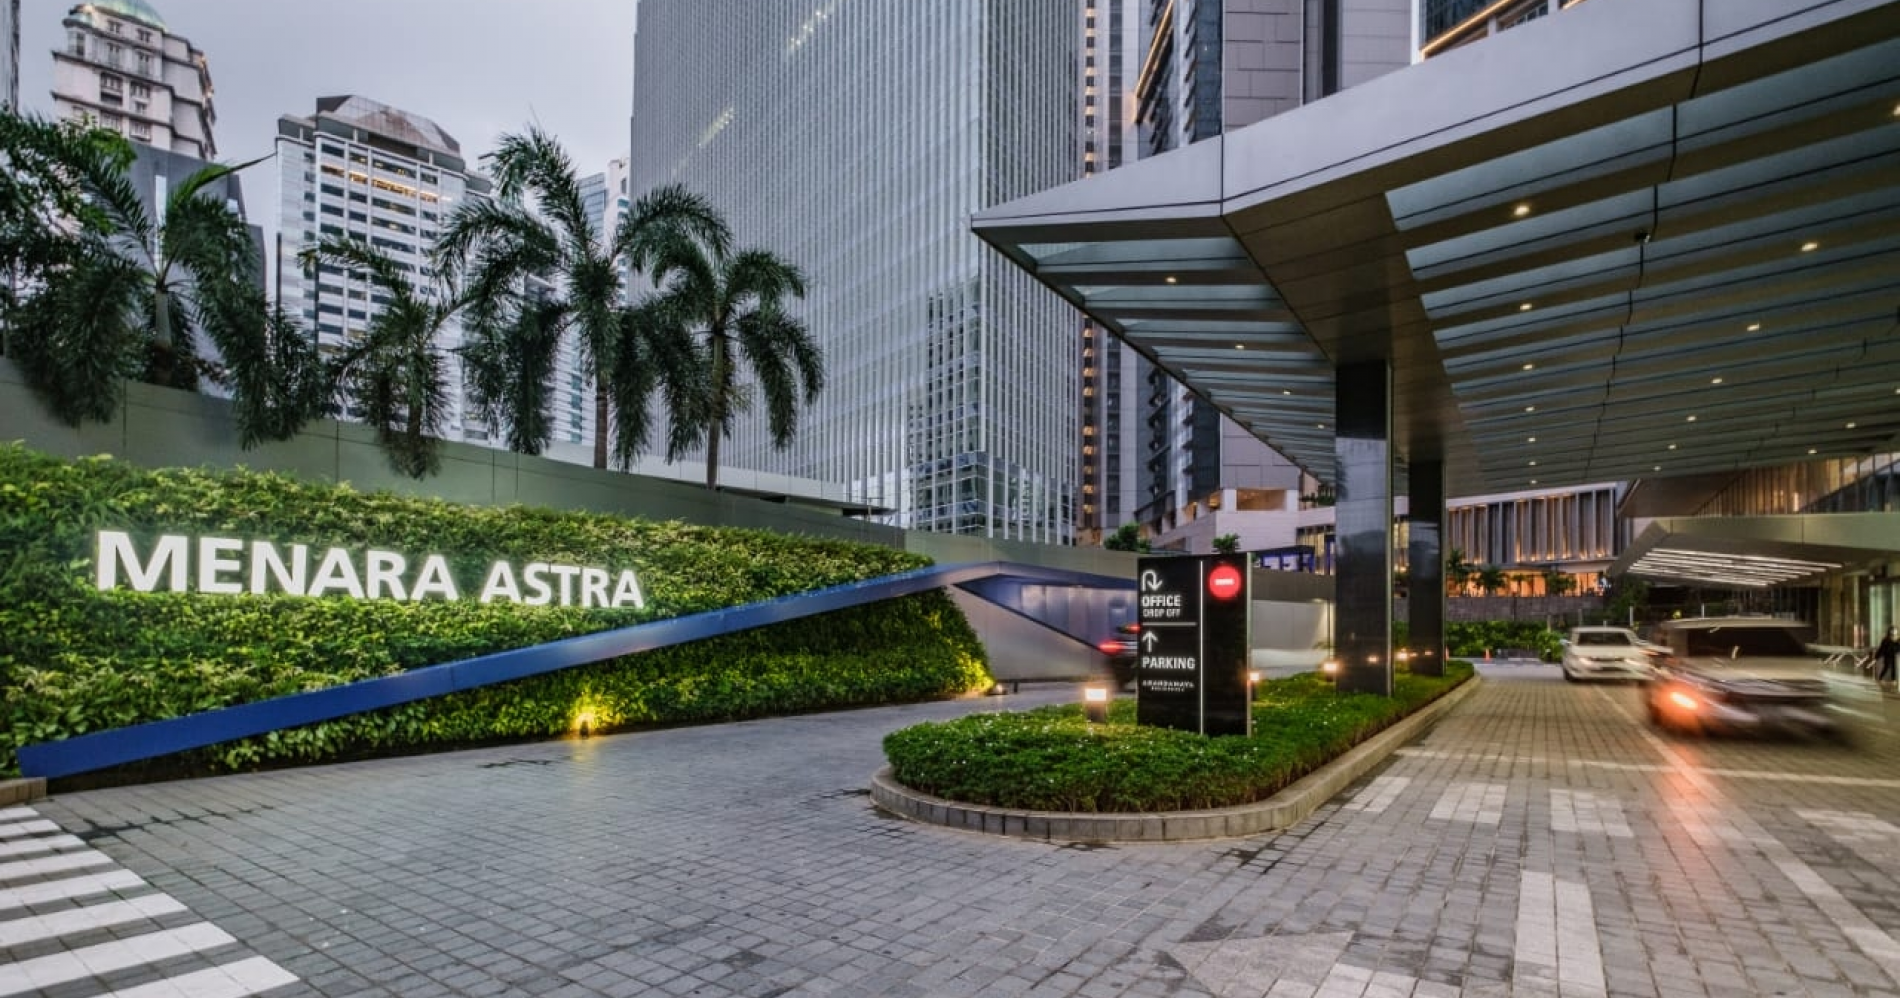 Menara Astra milik Group Astra International (Sumber Gambar : menara-astra.co.id)